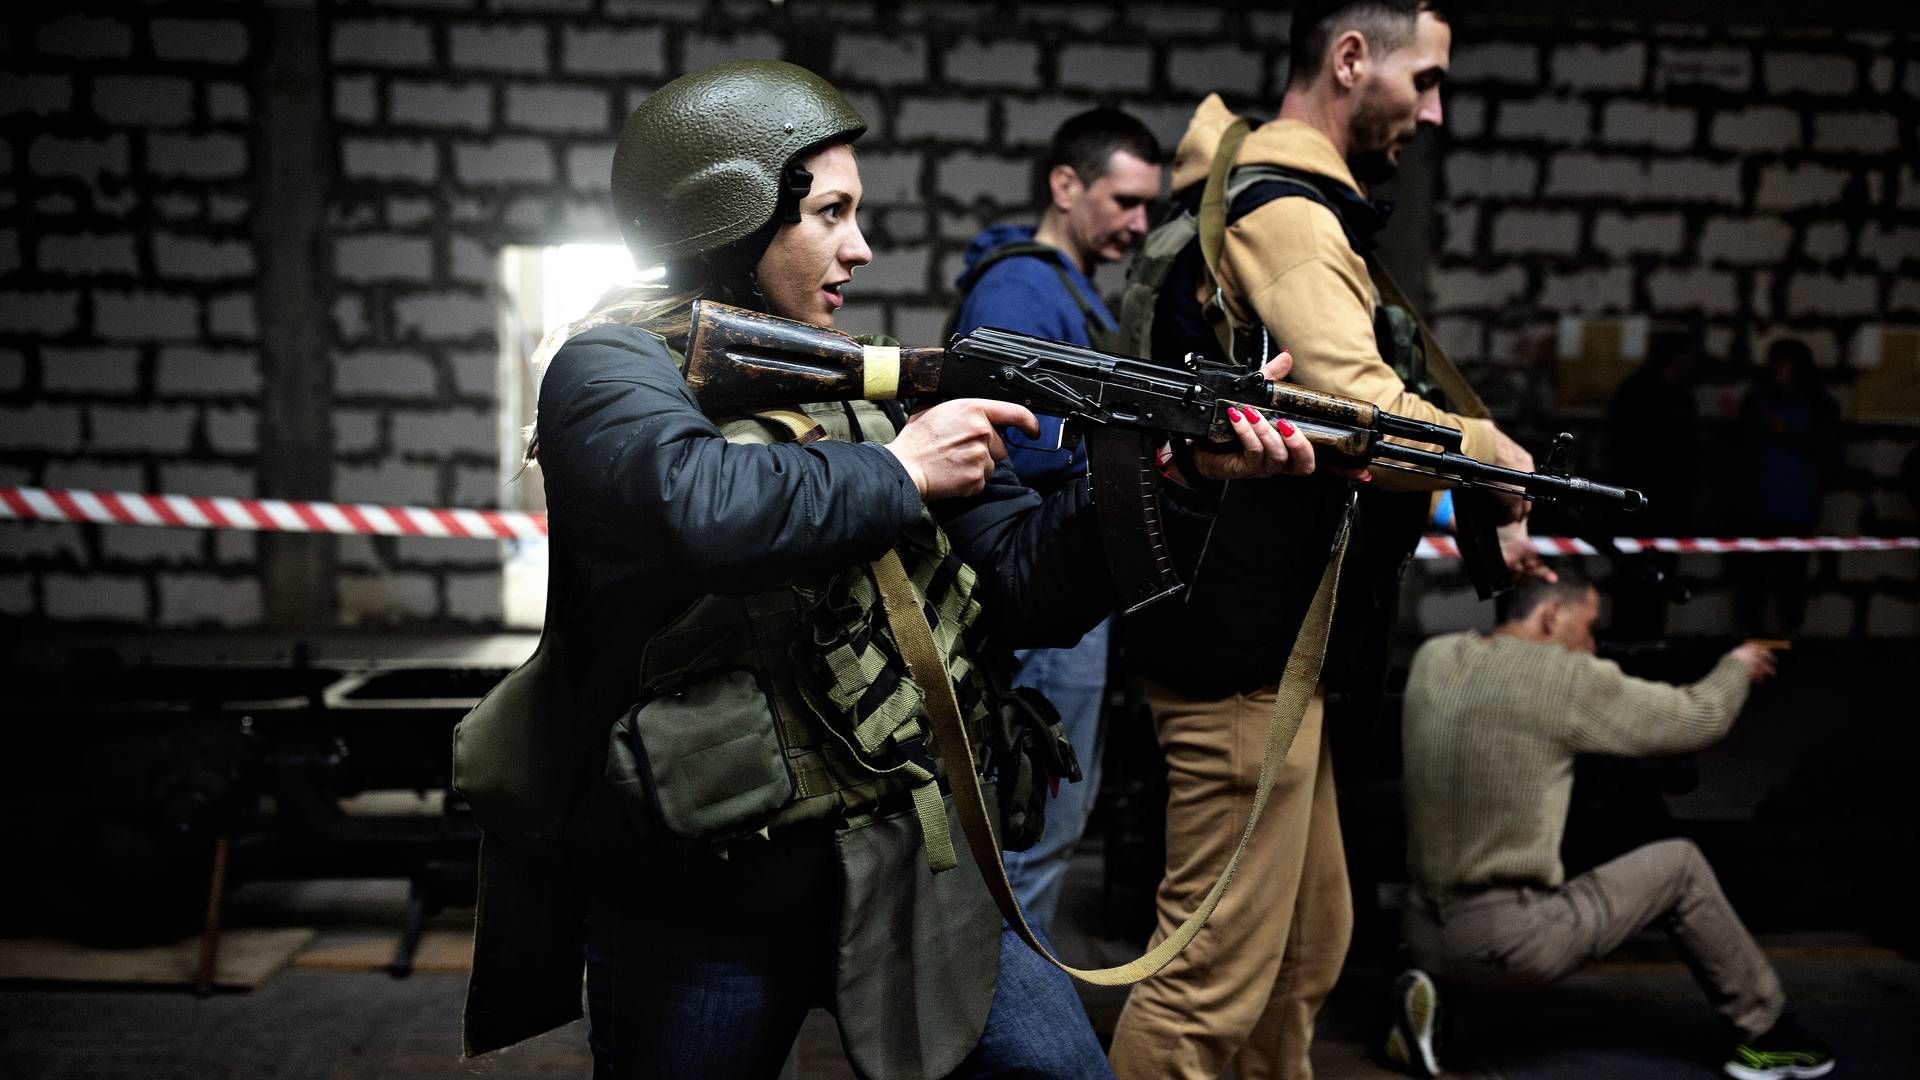 Vesten har forsynet Ukraine med store mængder våben i krigen mod Rusland. | Foto: Martin Lehmann